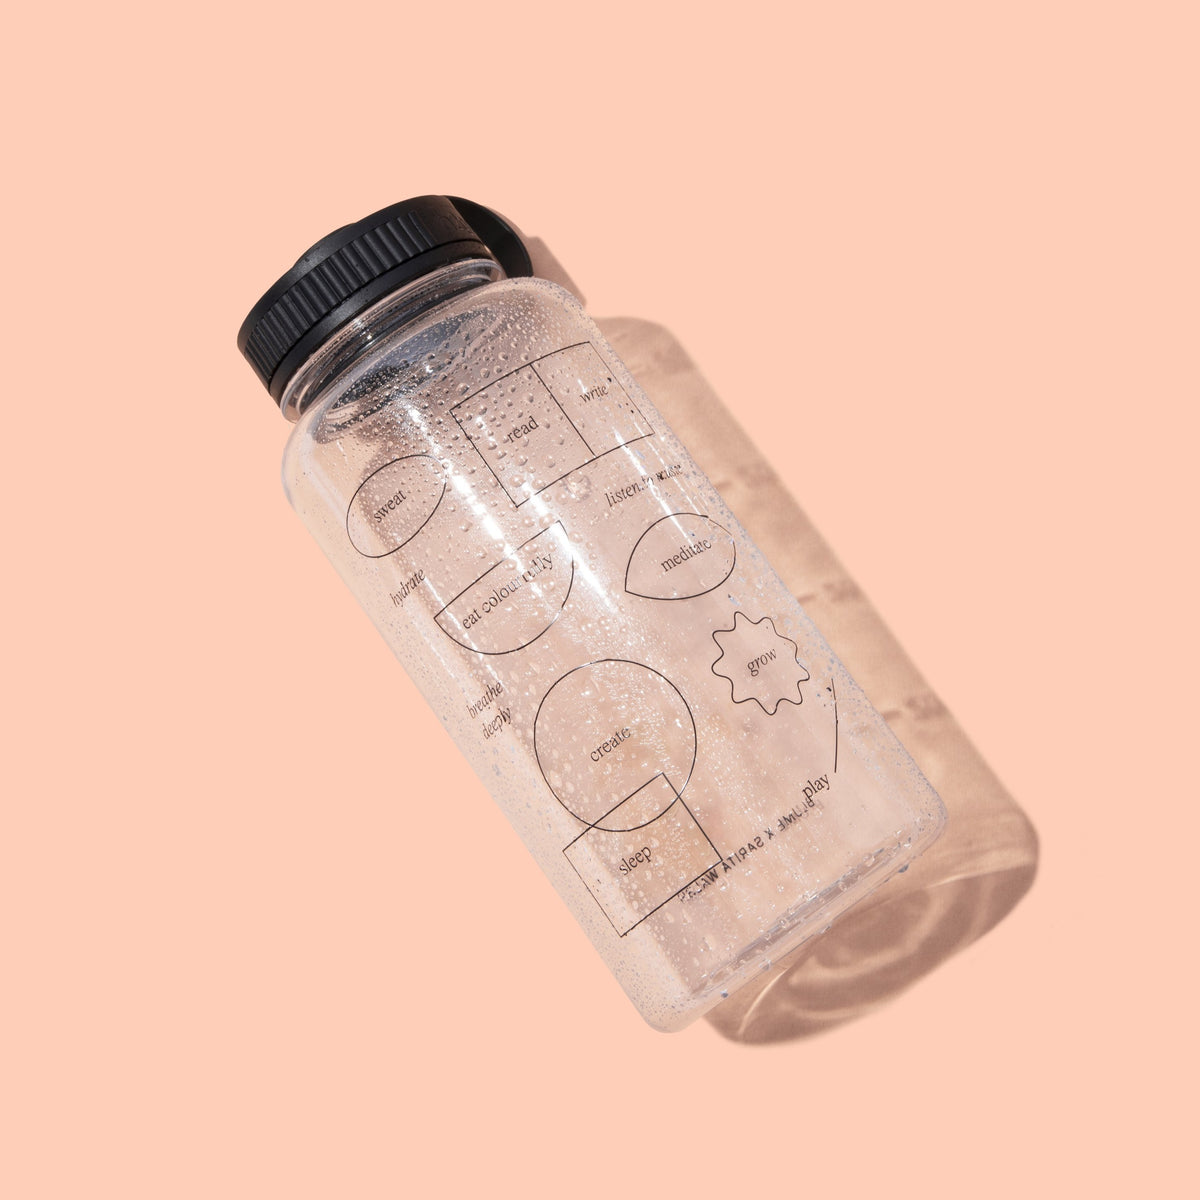 Bomb Pop Water bottle – Sara Hynes Designs